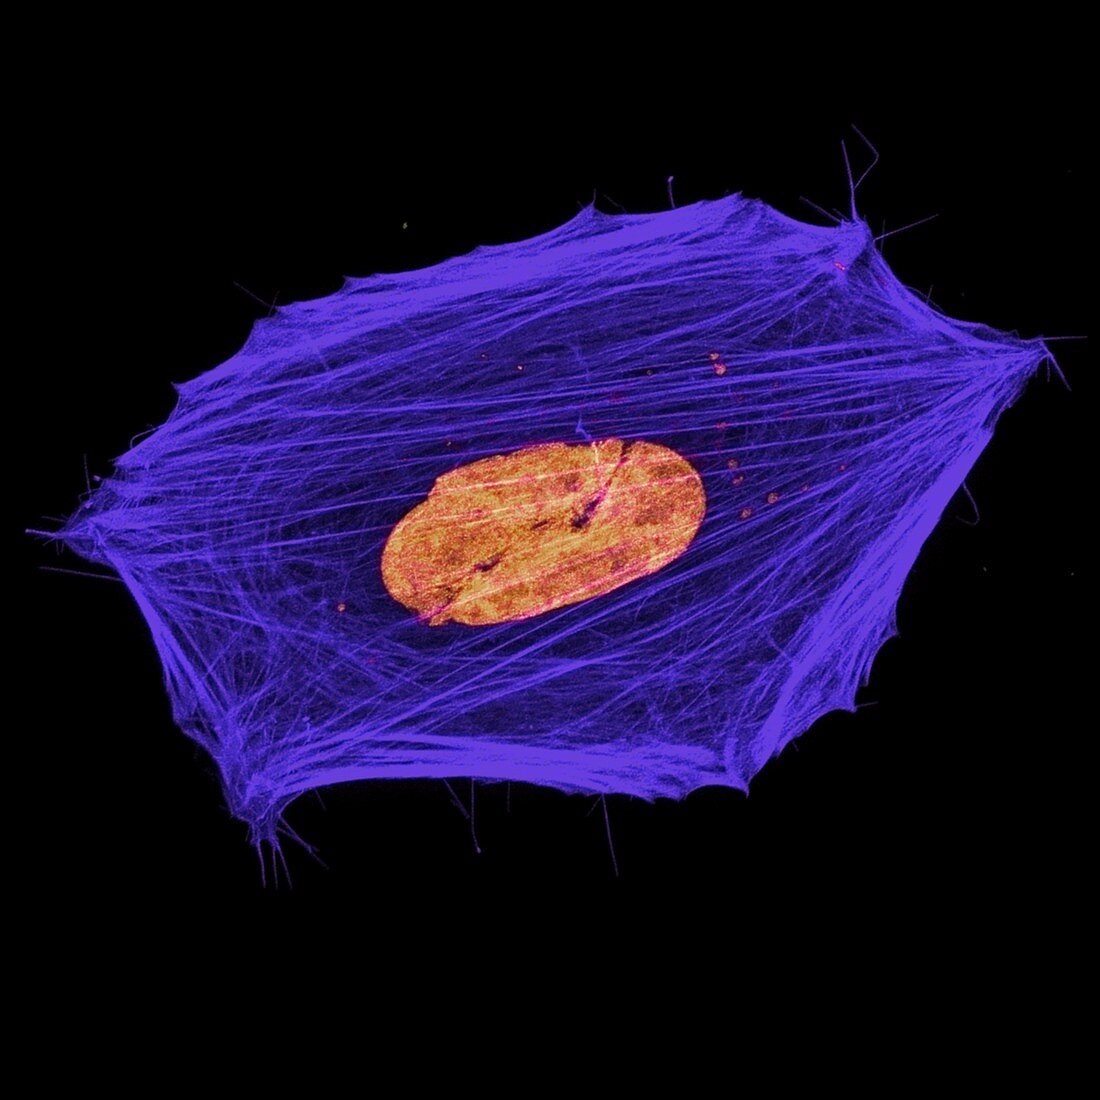 Single Neuroblastoma cell, light micrograph